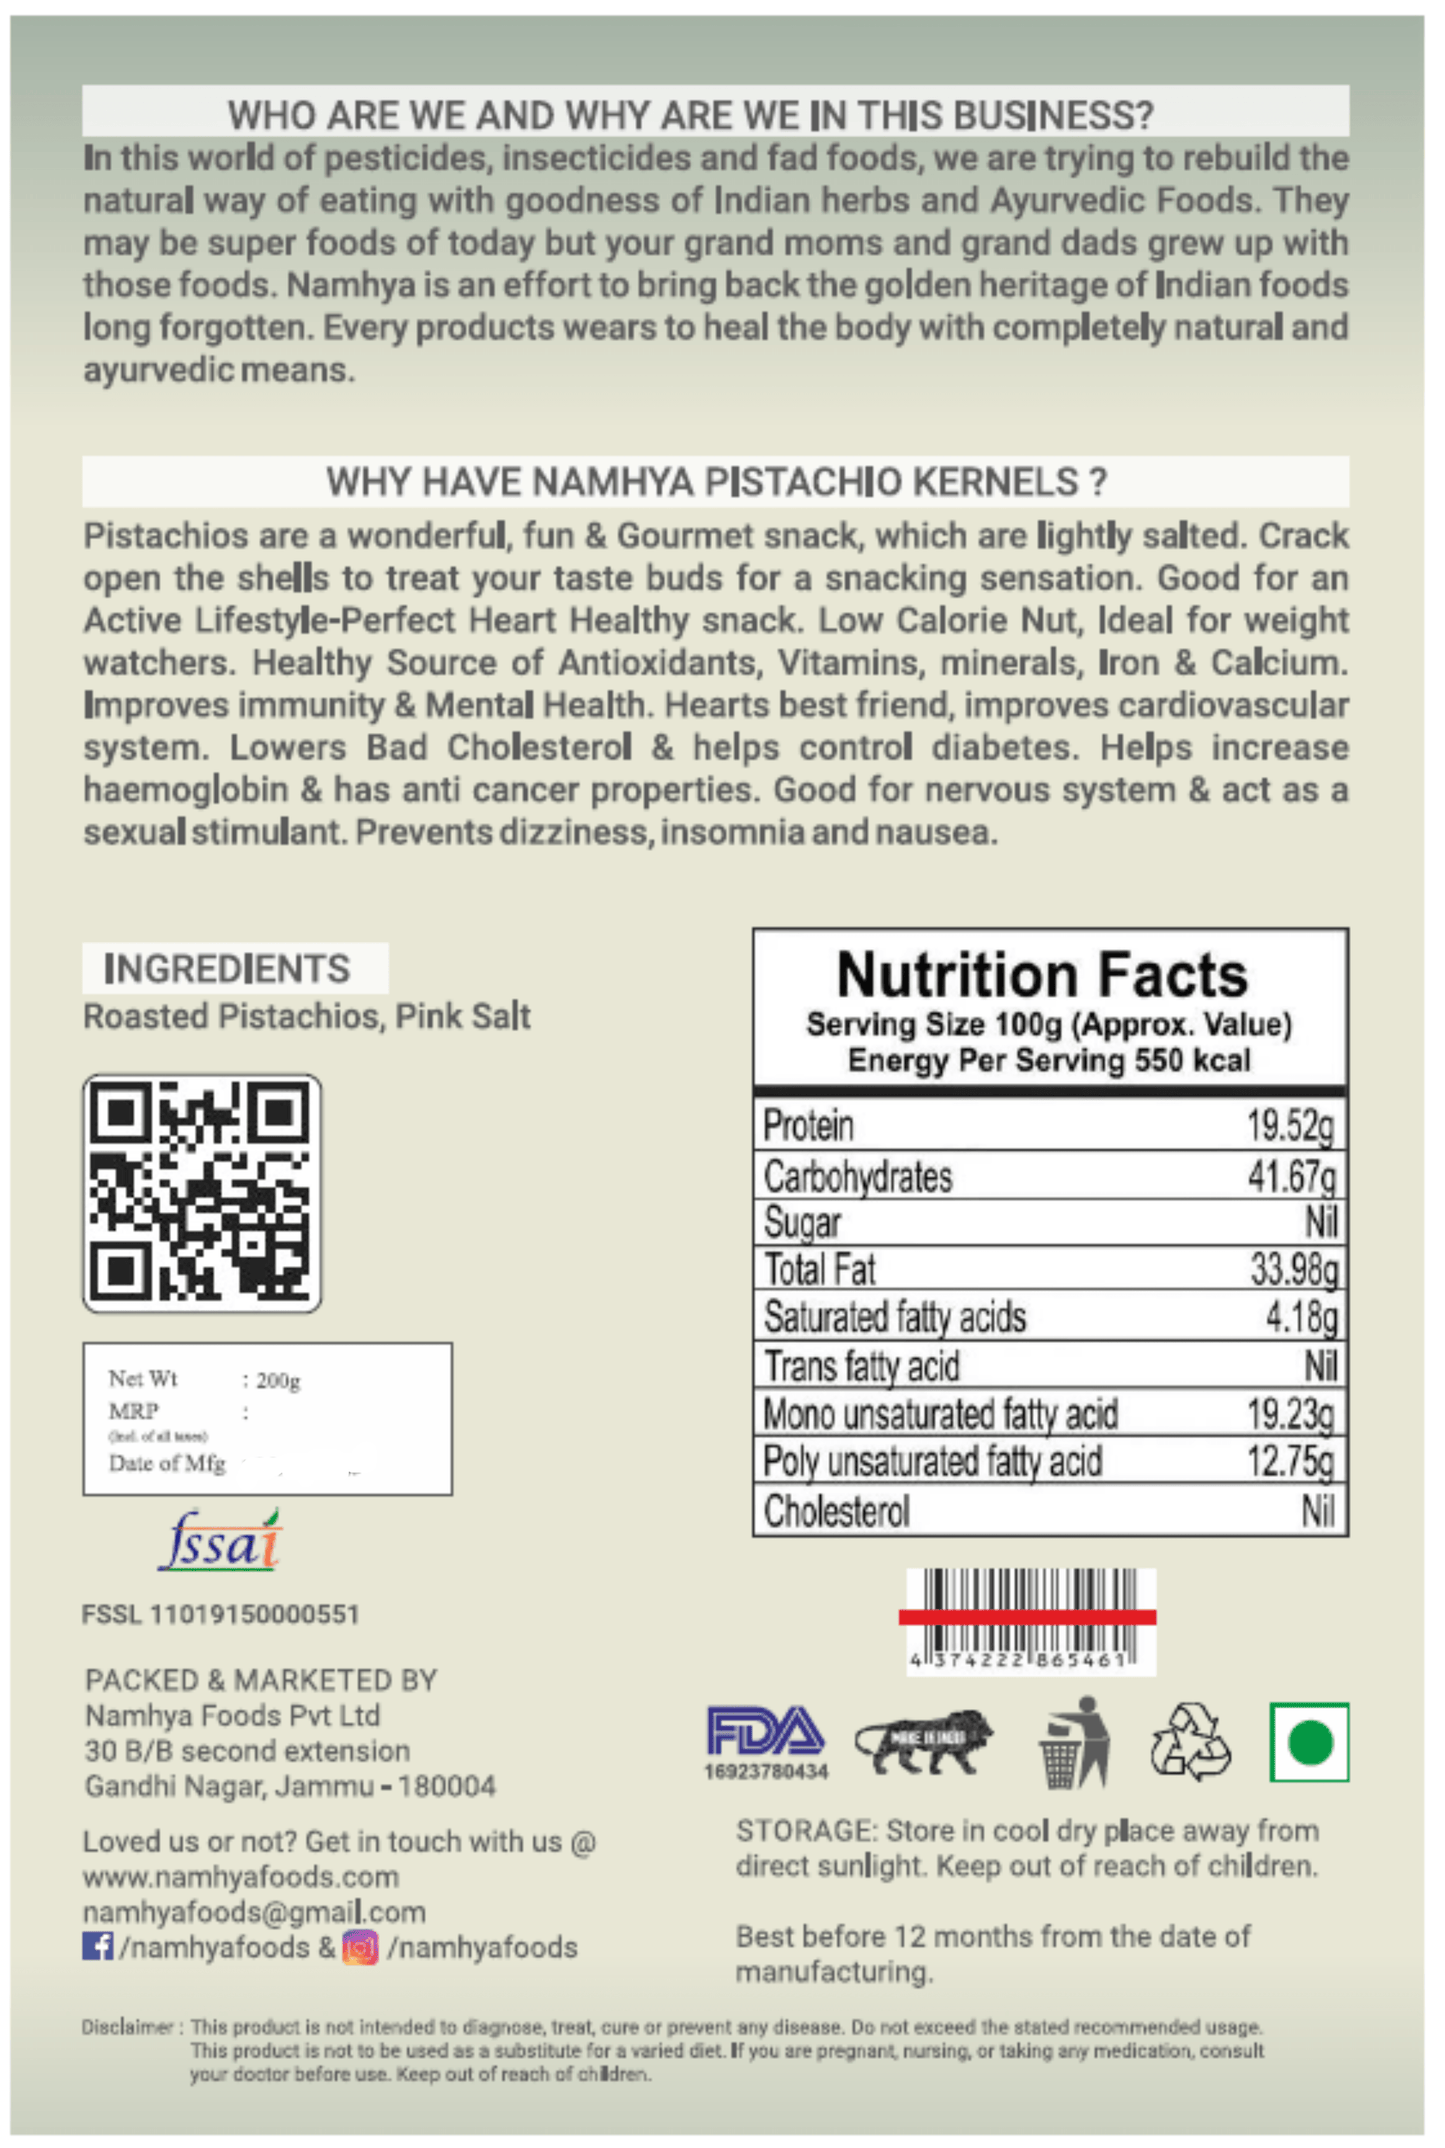 Namhya Premium California Pistachios -Rich in Antioxidant and Gut Friendly (200g)